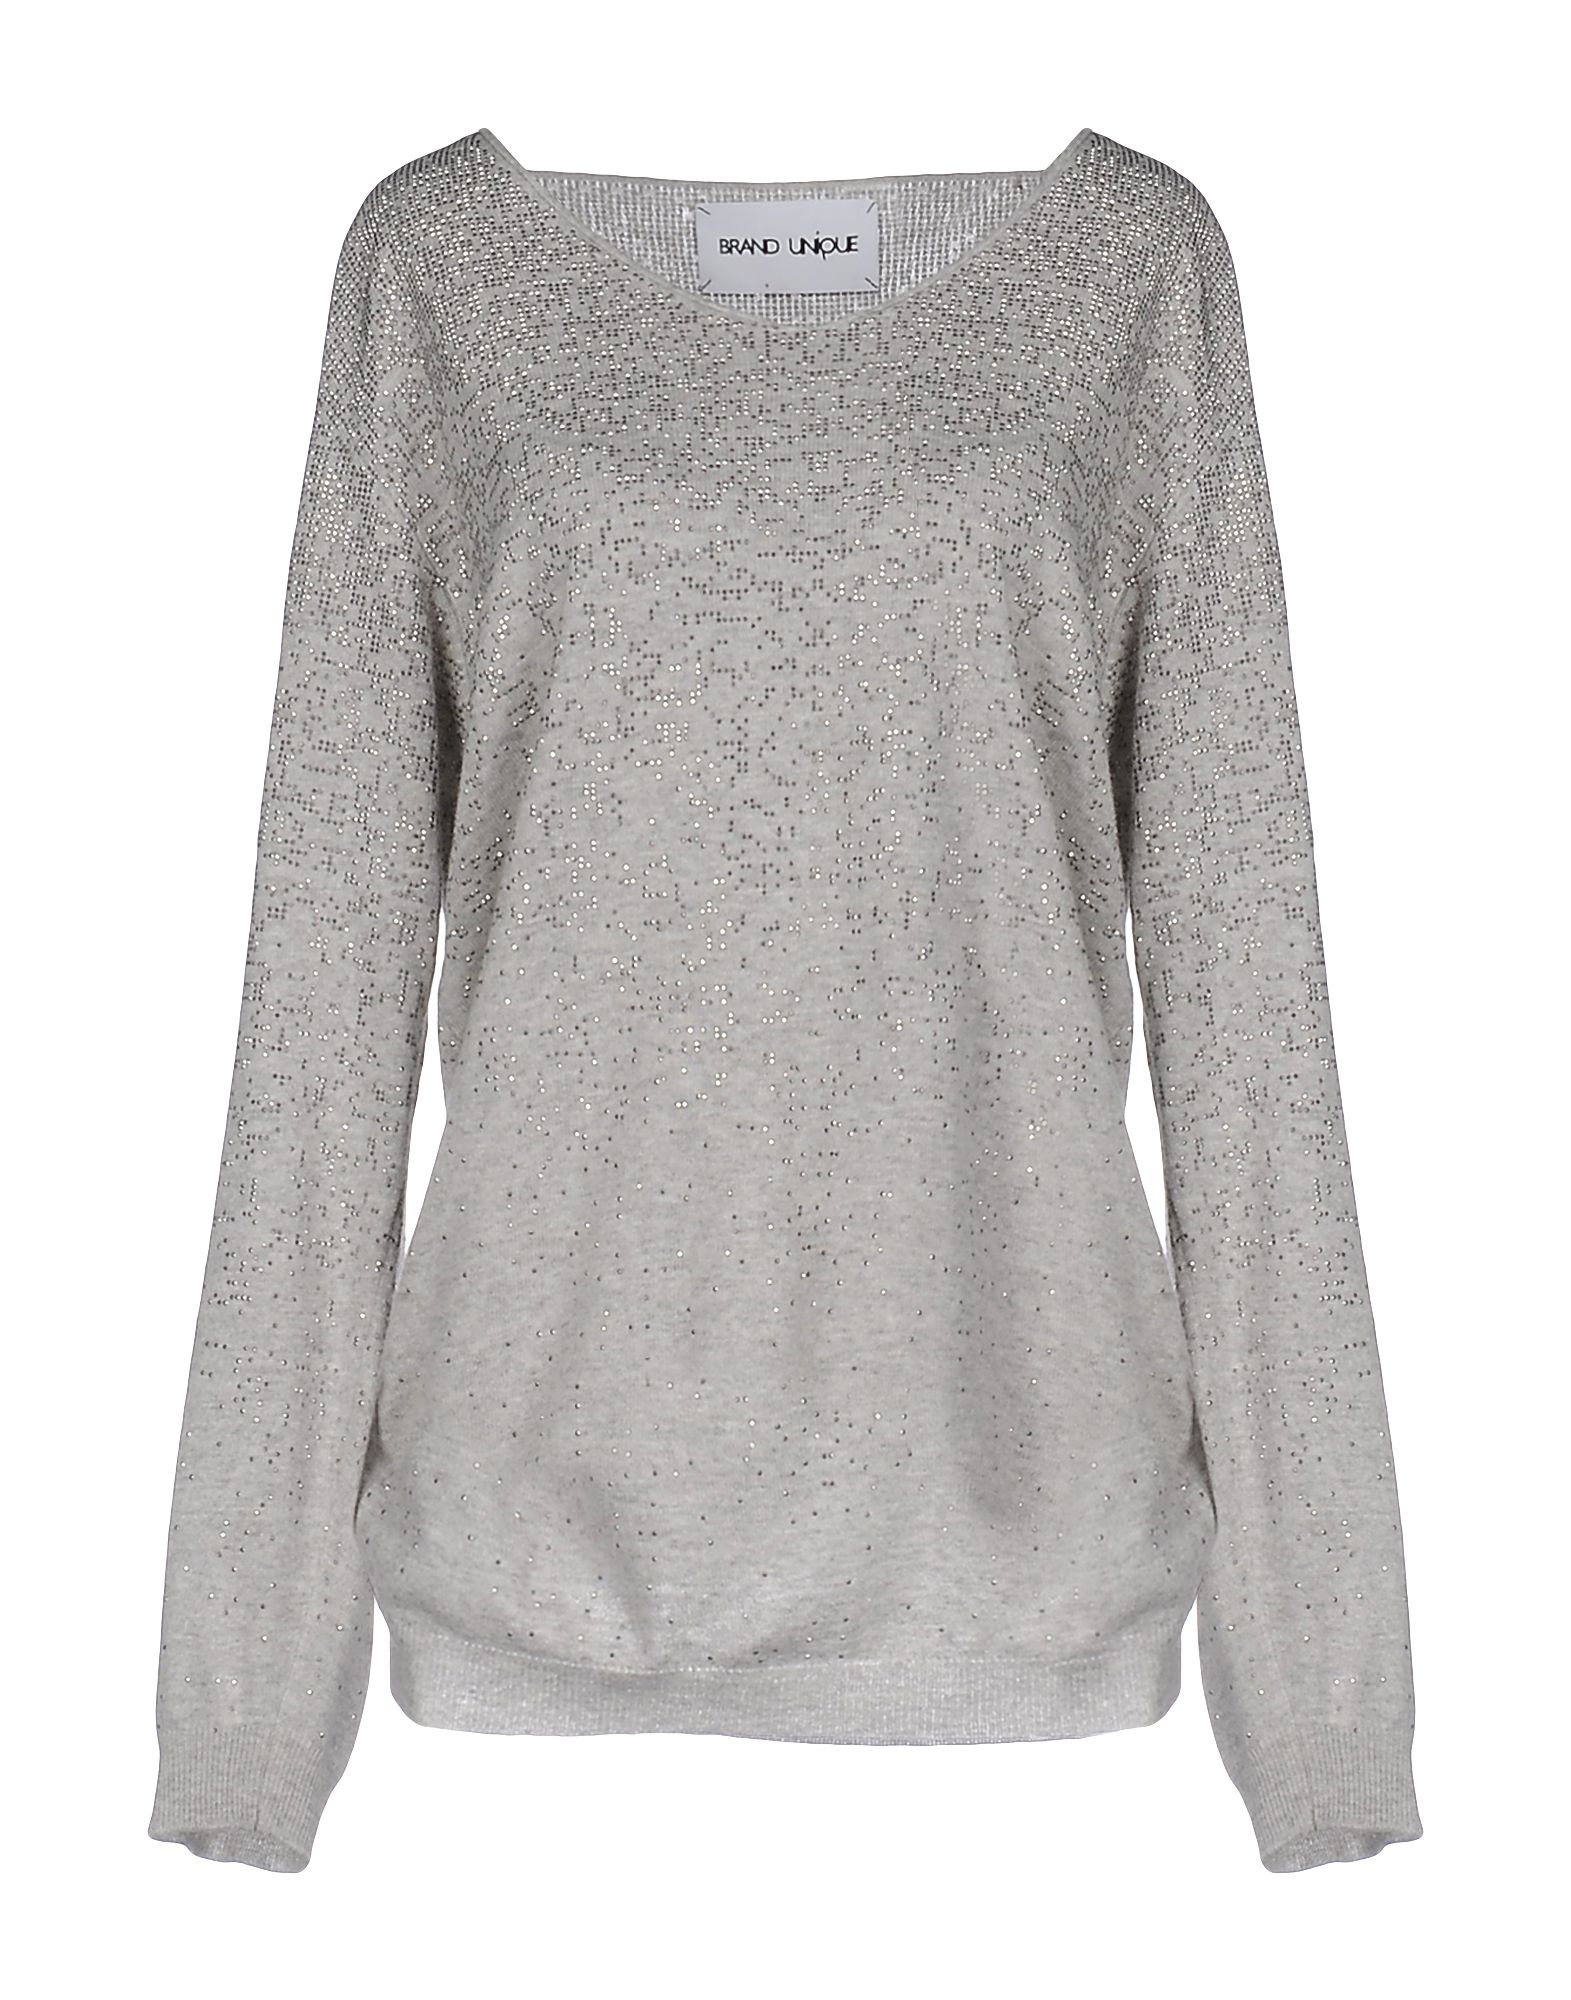 Brand Unique Sweater In Light Grey | ModeSens